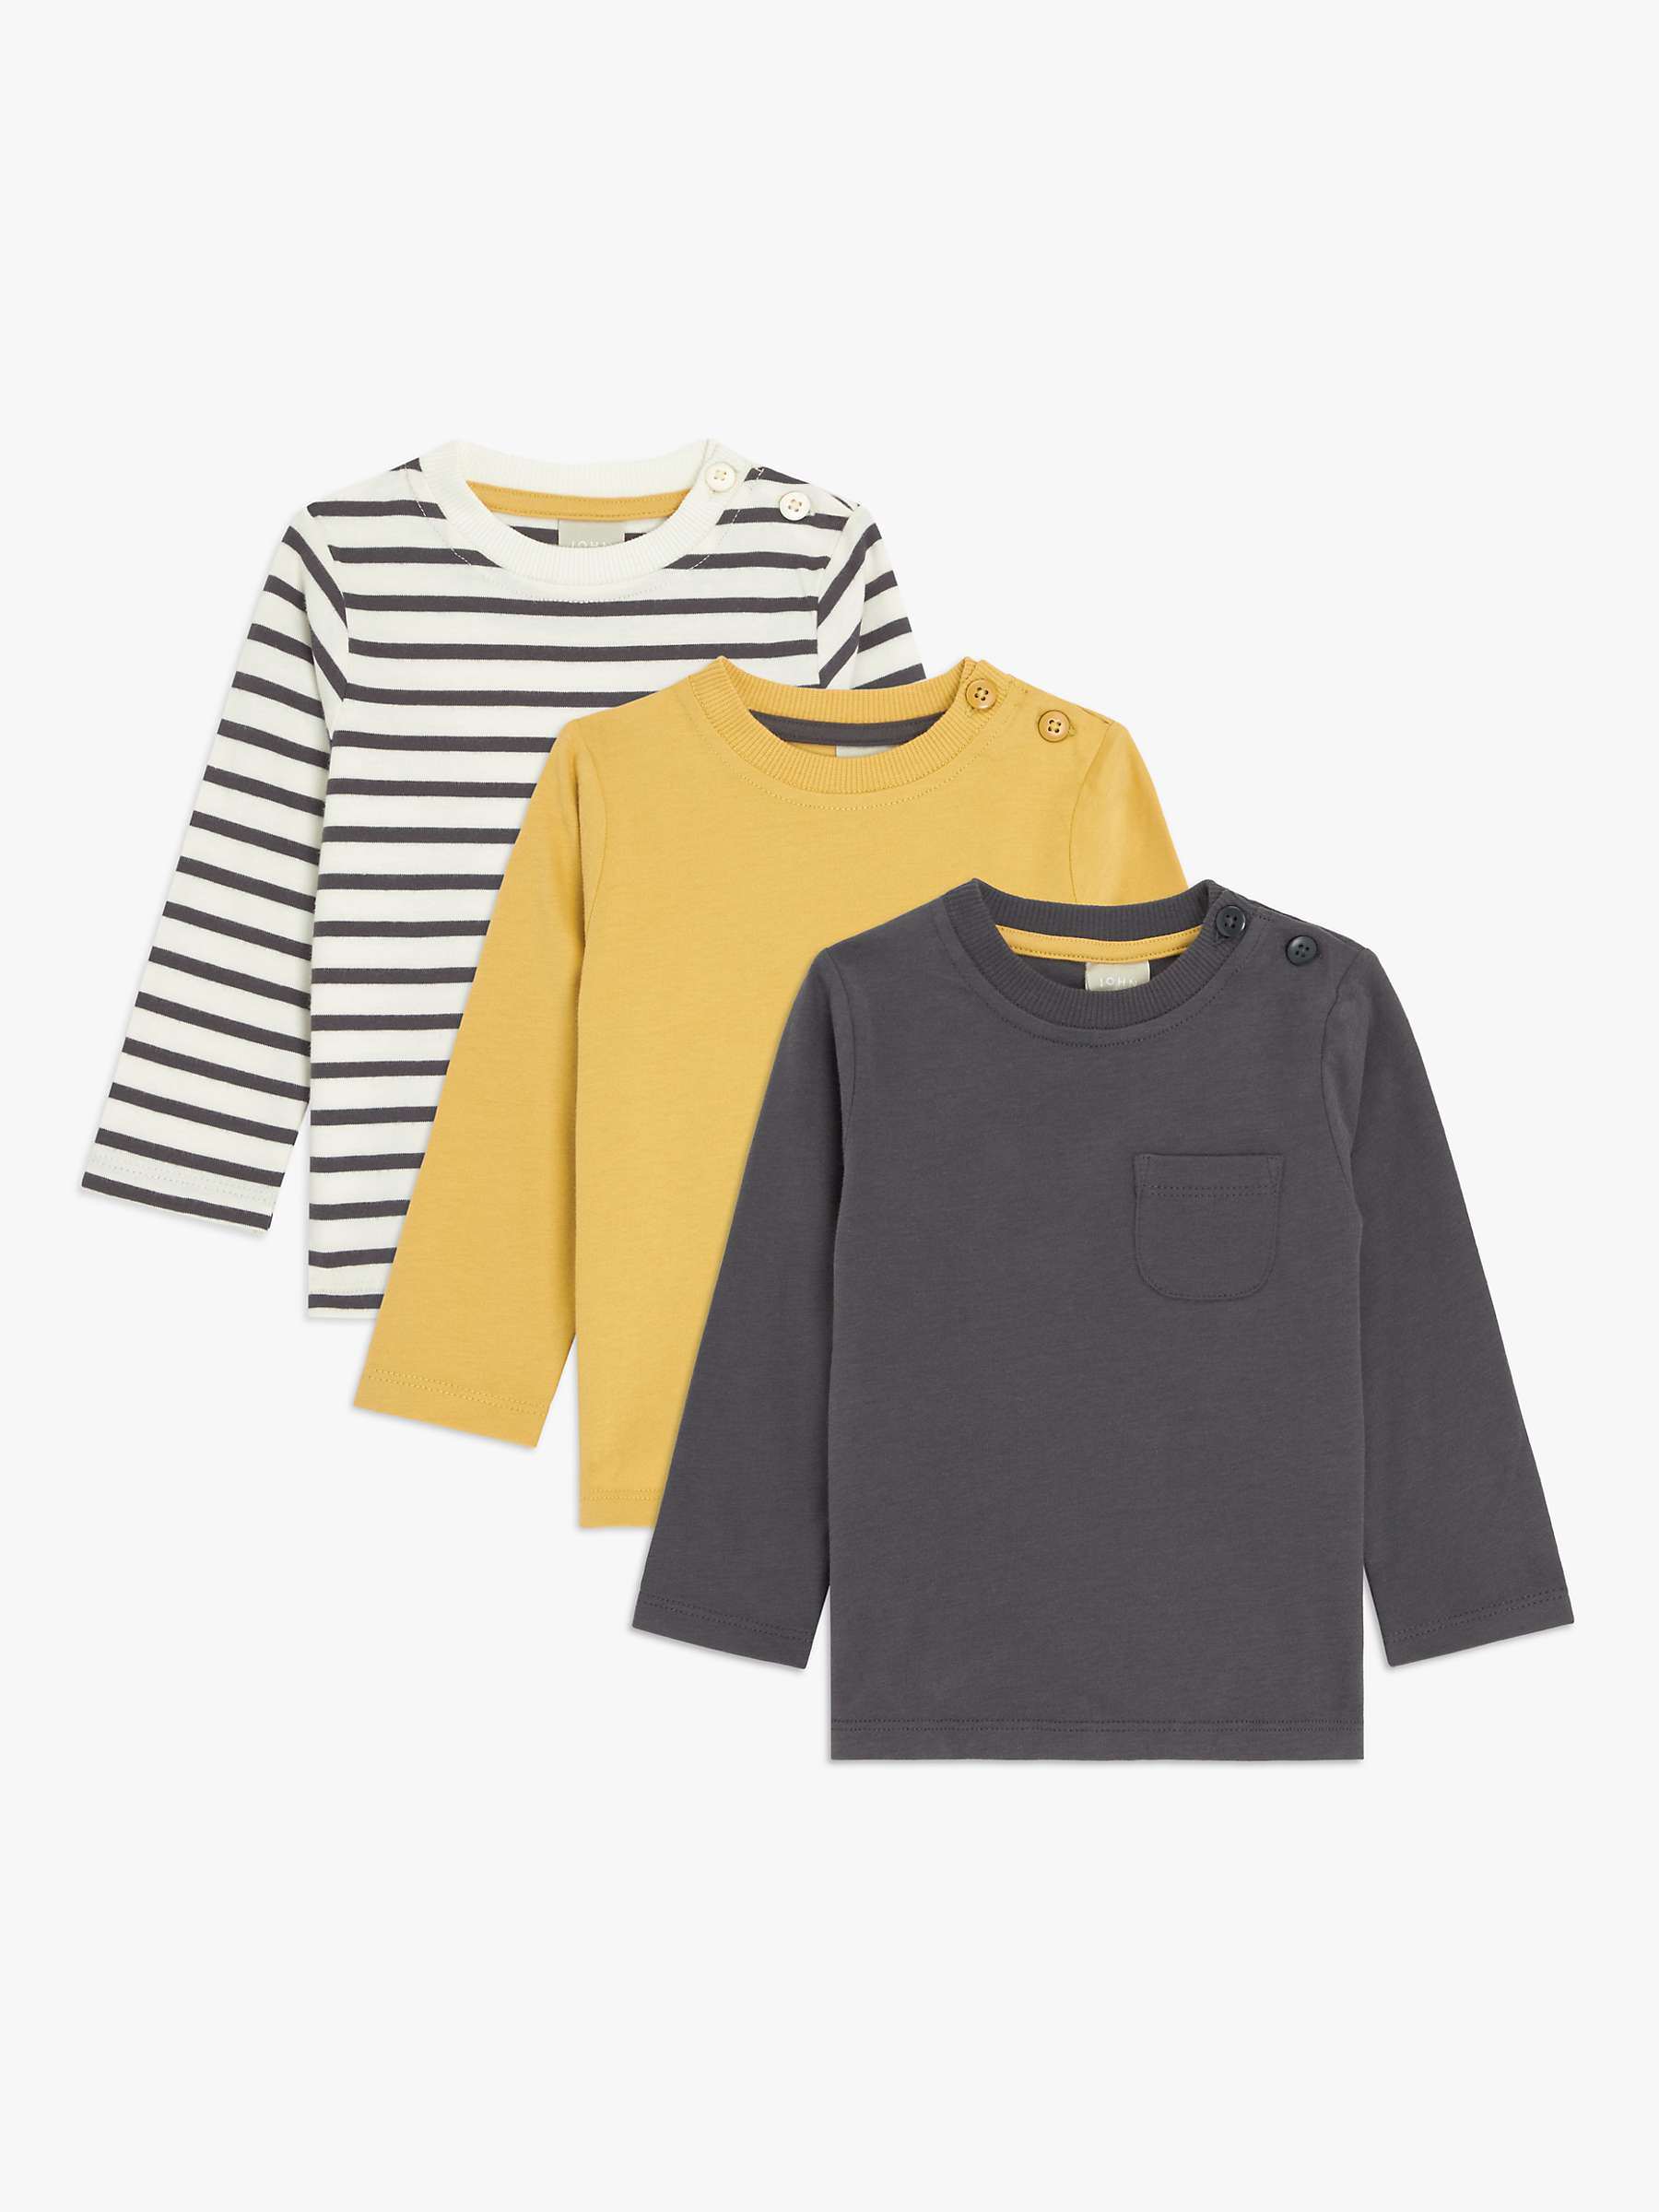 Buy John Lewis Baby Stripe & Solid Long Sleeve T-Shirt, Pack of 3, Multi Online at johnlewis.com